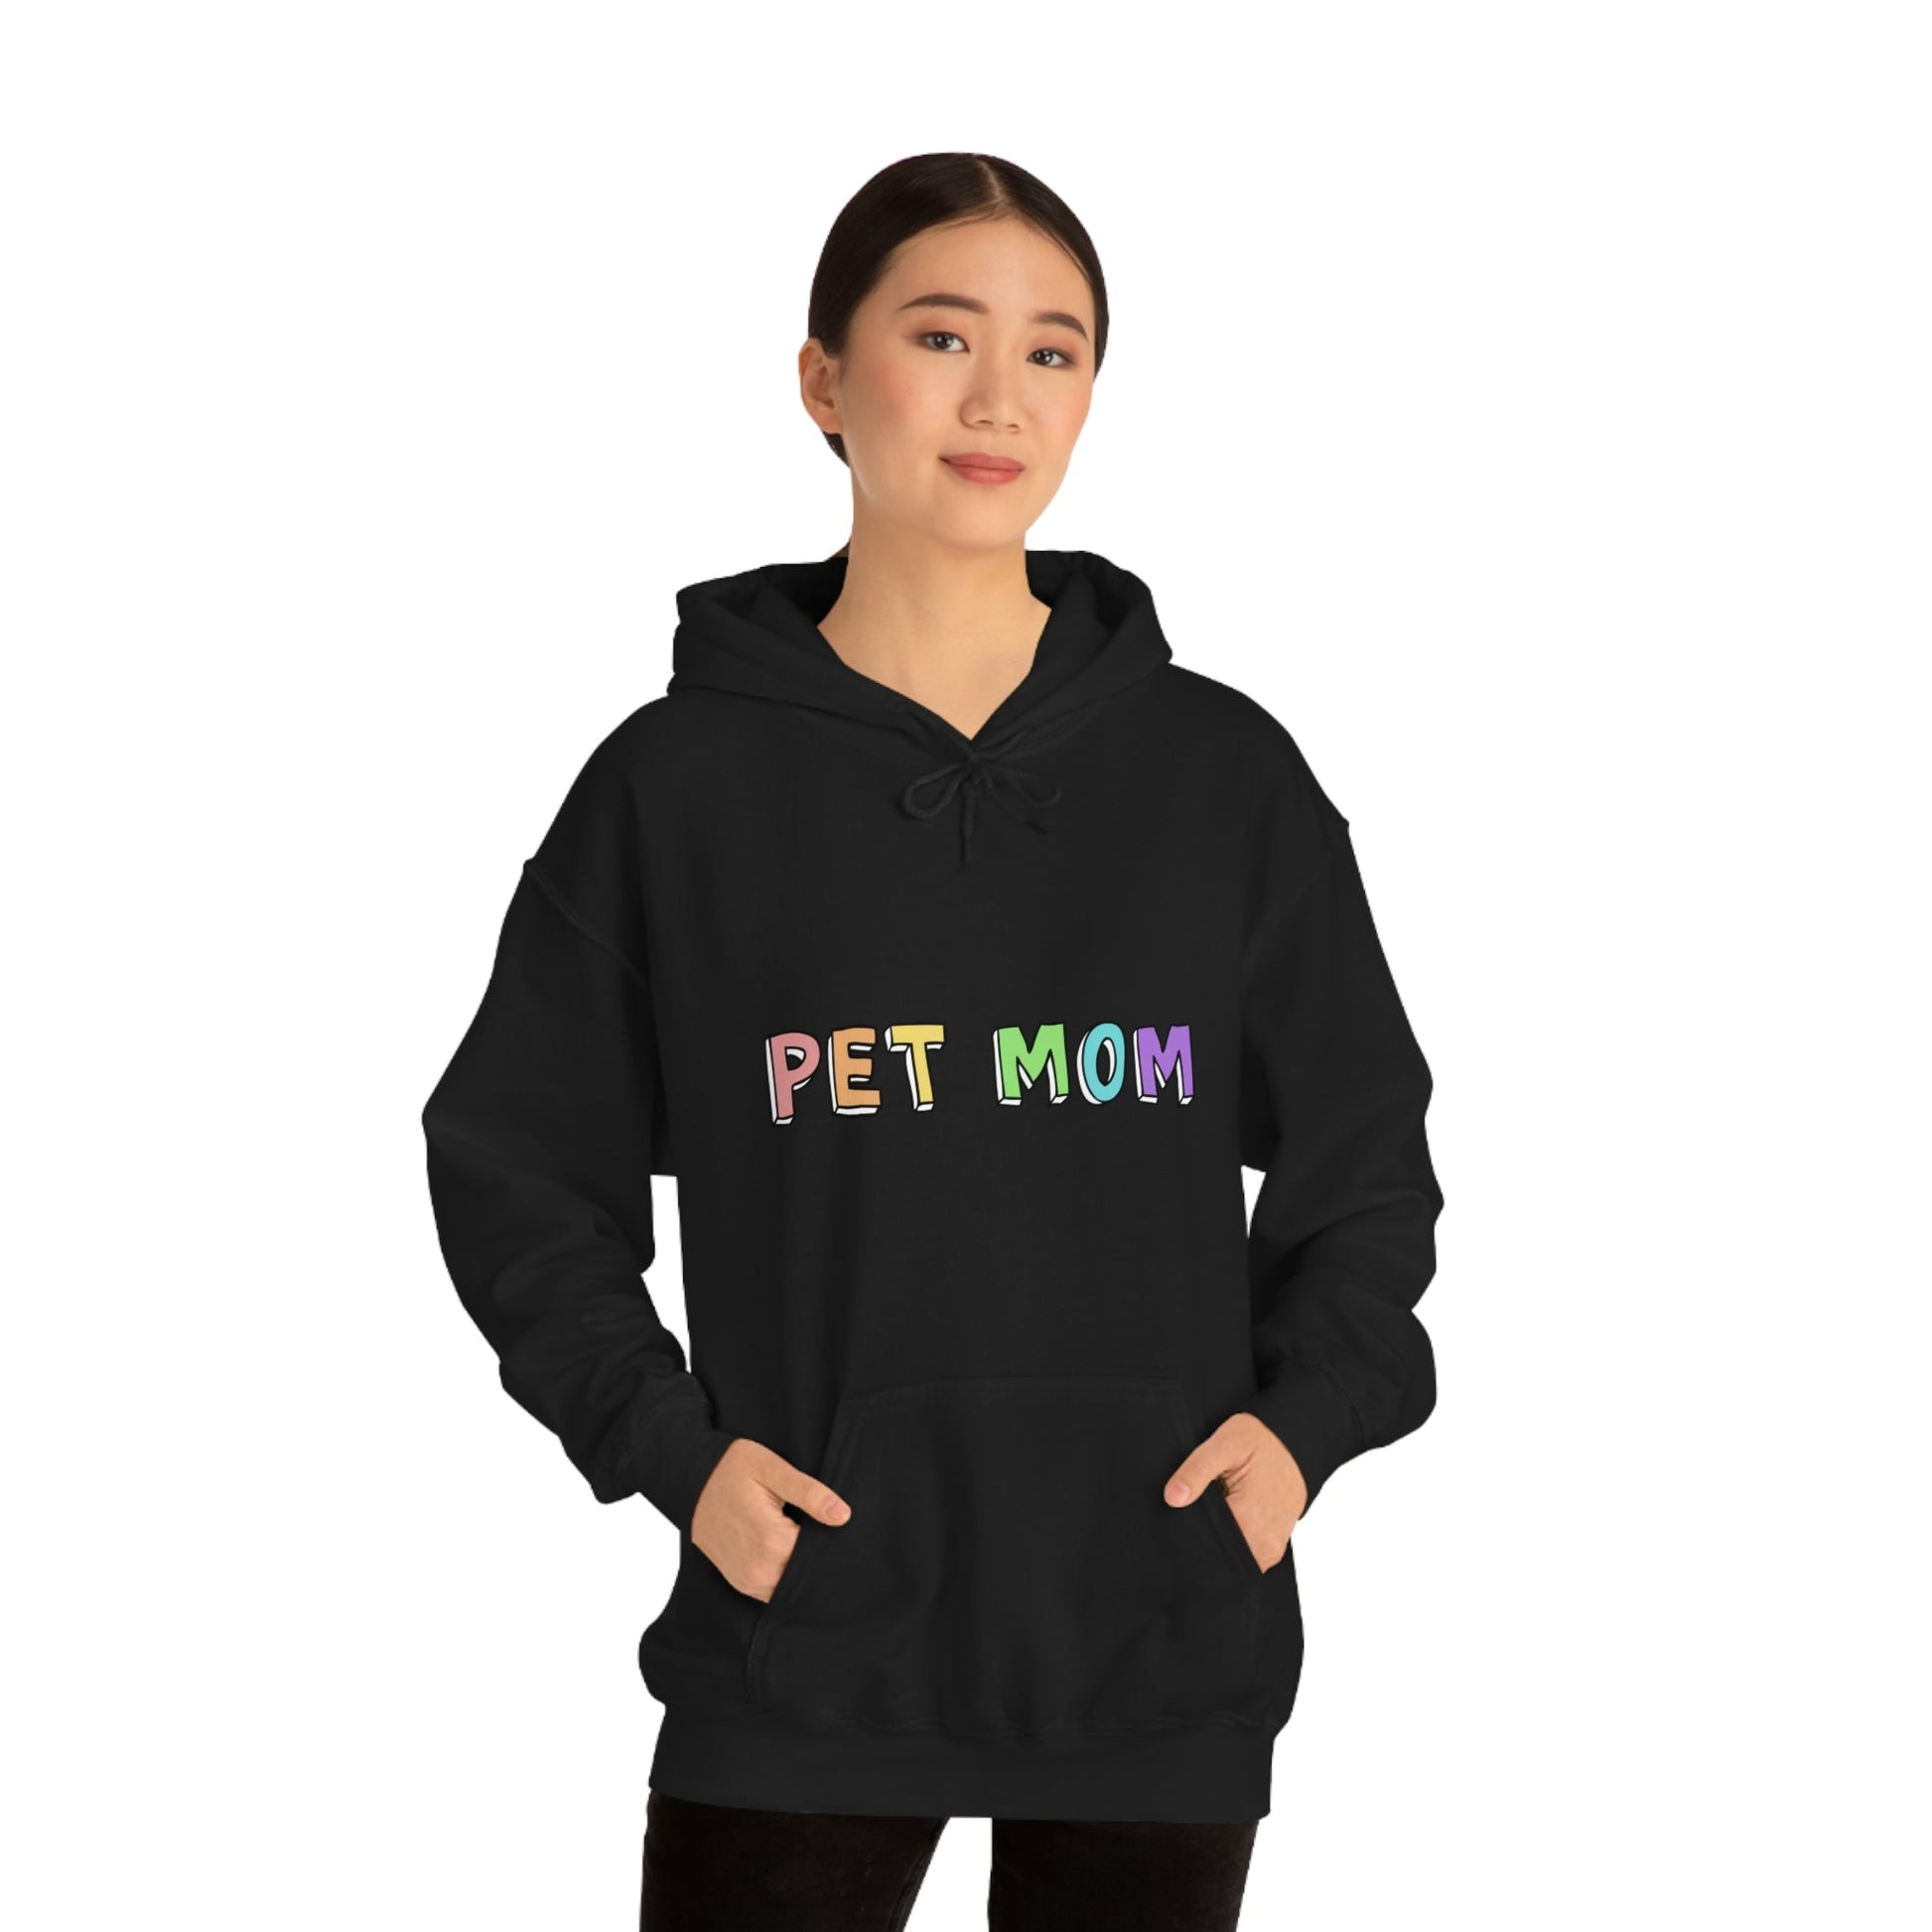 Pet Mom | Hooded Sweatshirt - Detezi Designs-51907986644669691324